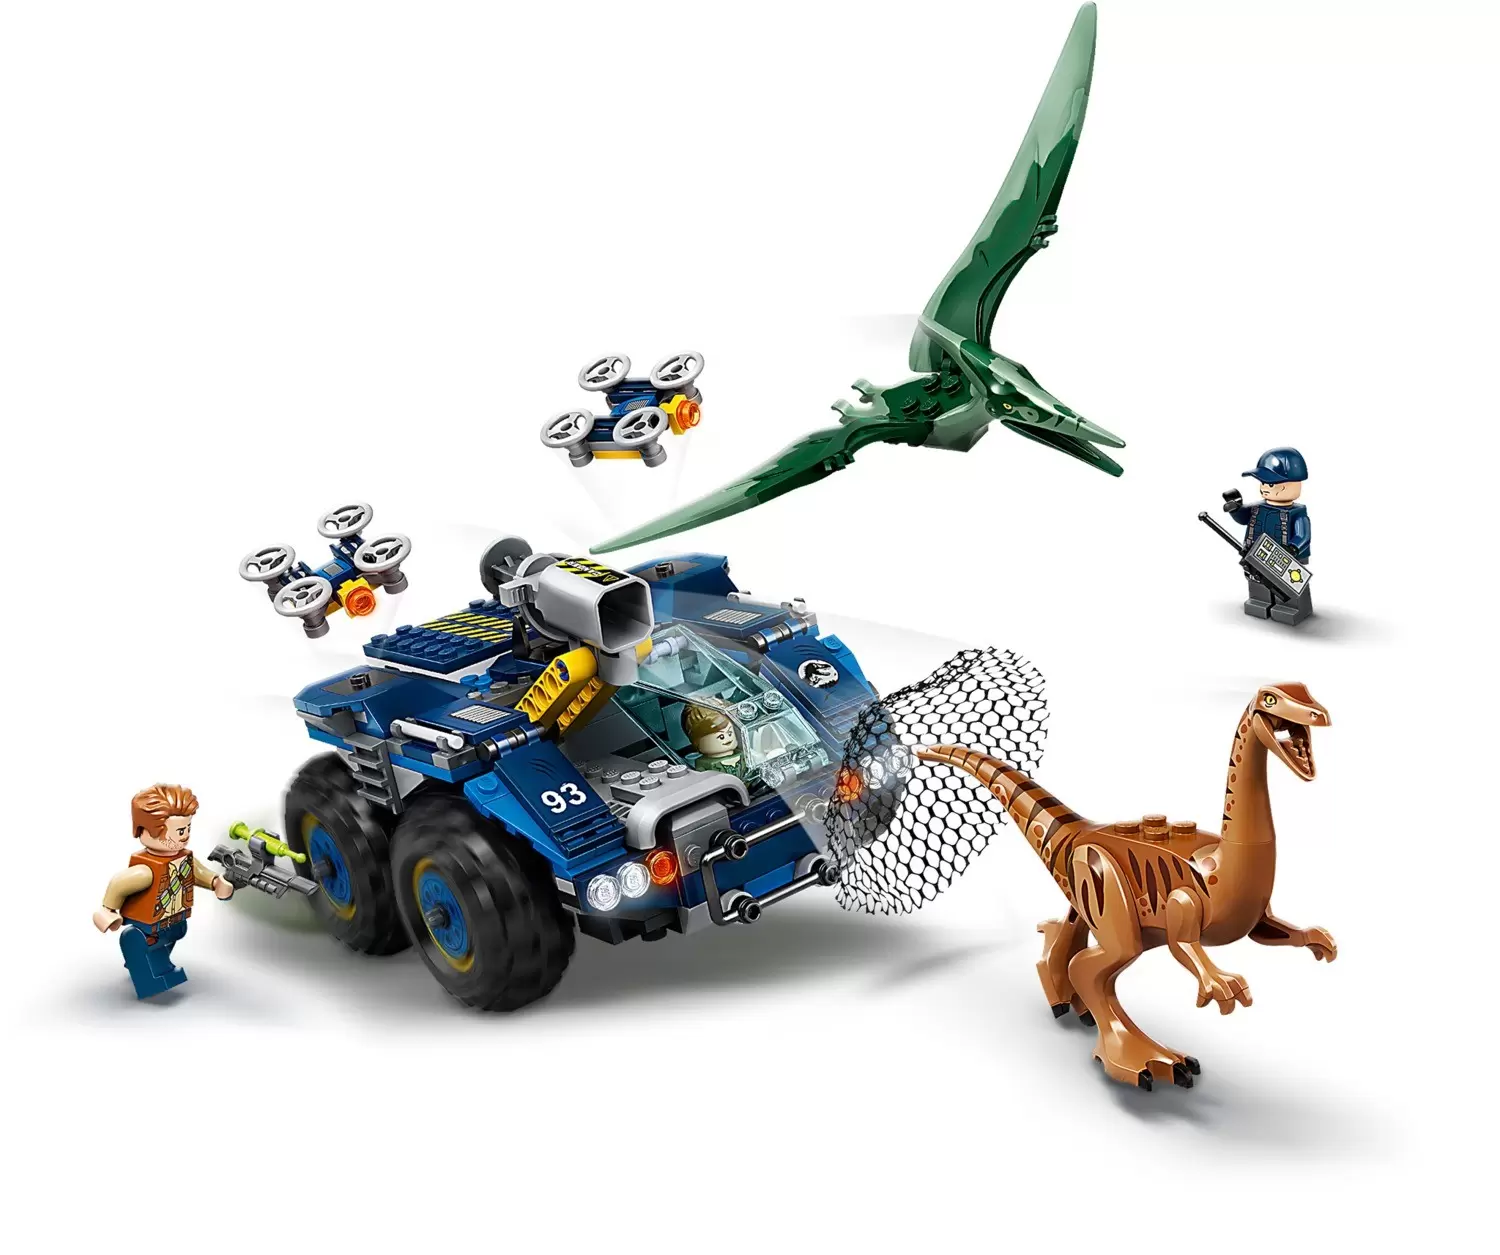 LEGO Jurassic World - Gallimimus and Pteranodon Breakout